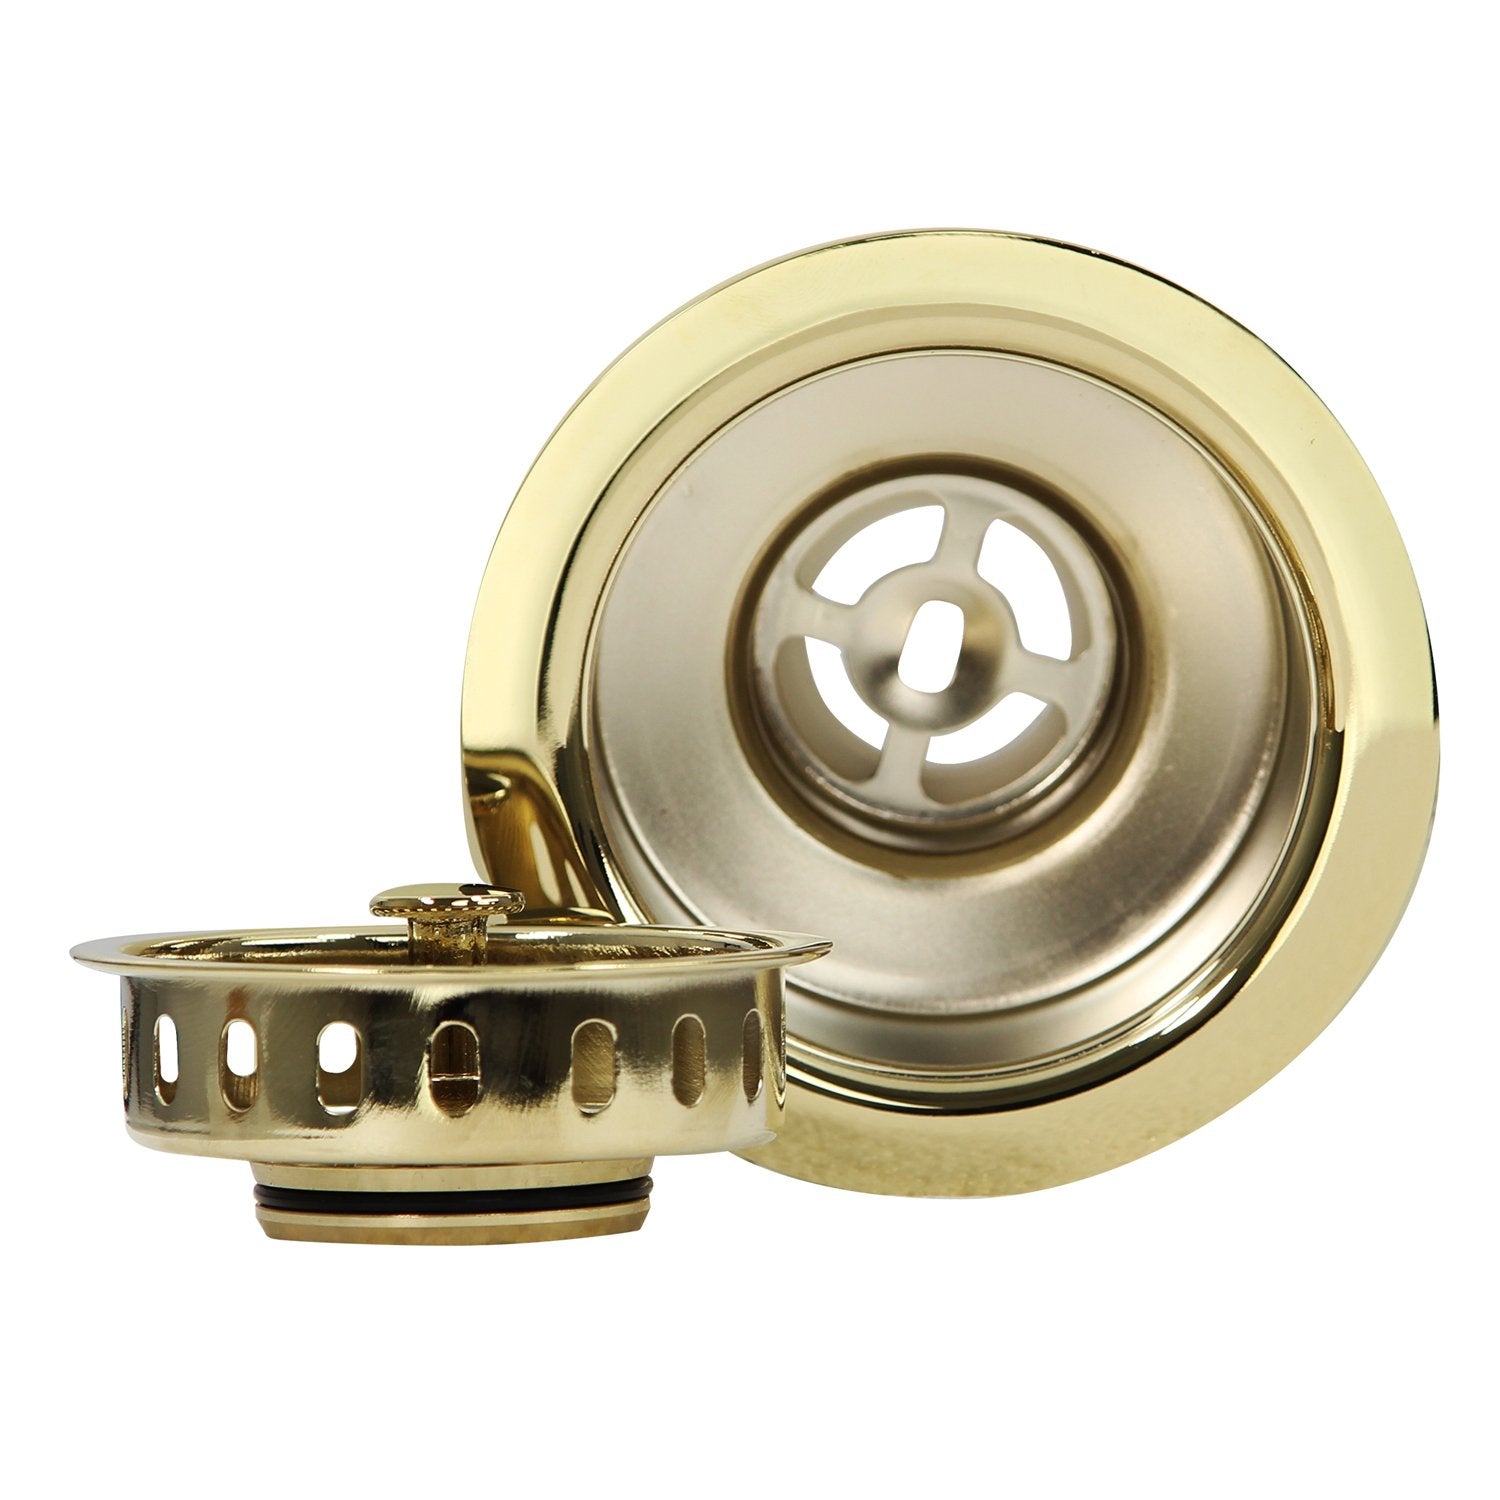 Nantucket Sinks Polished Brass 3.5-Inch Kitchen Sink Drain